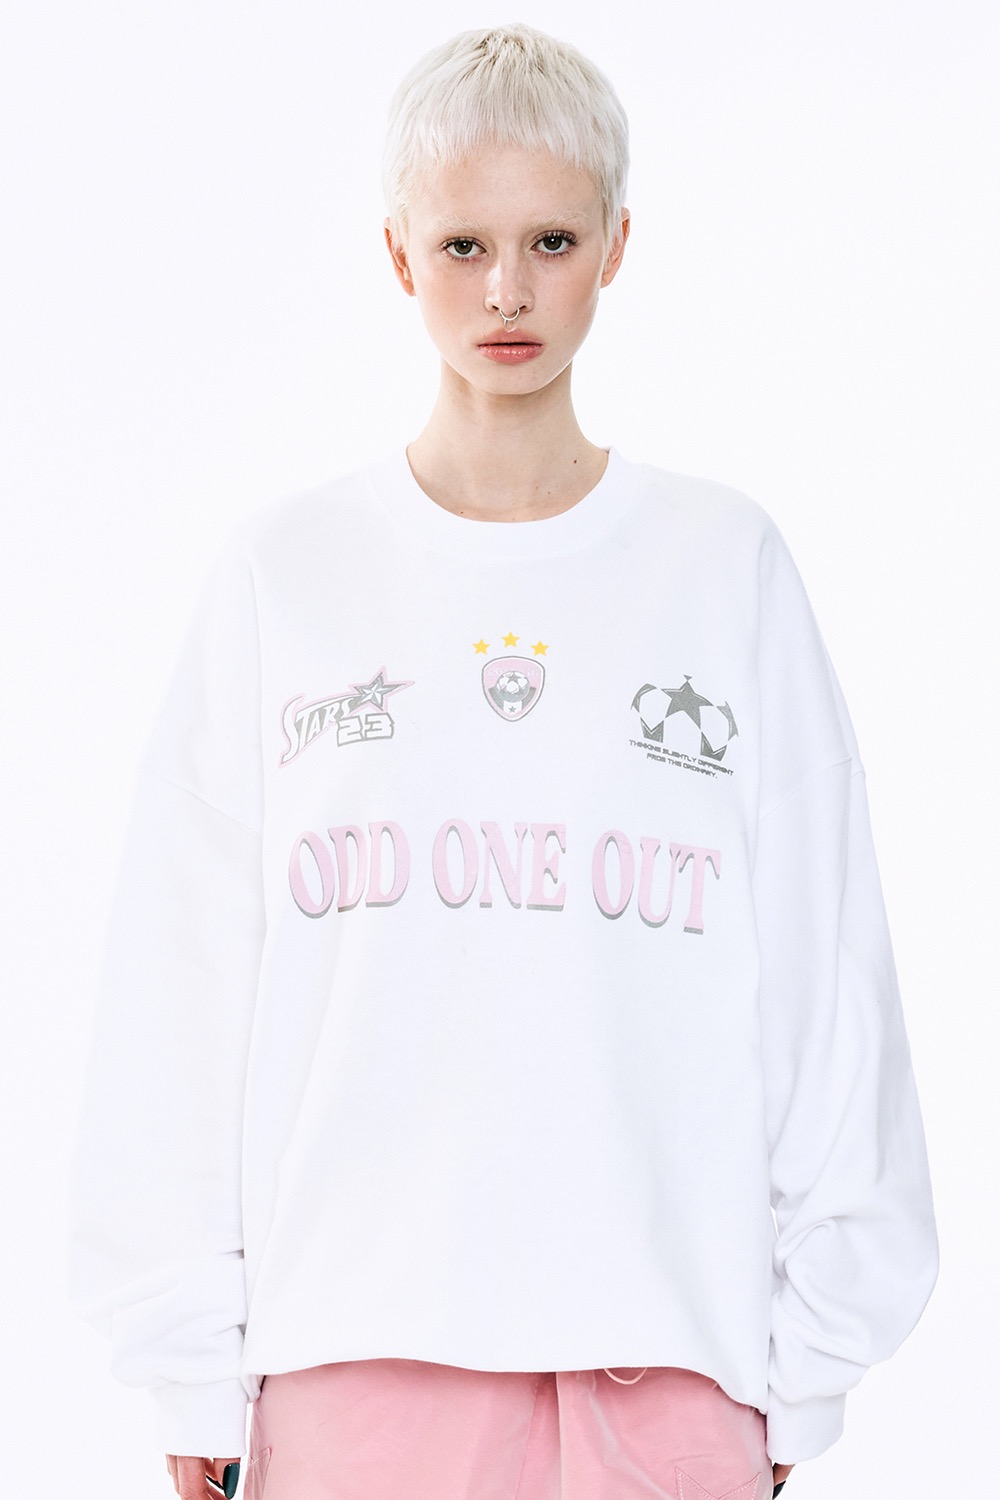 Oddoneout star logo sweatshirts_White